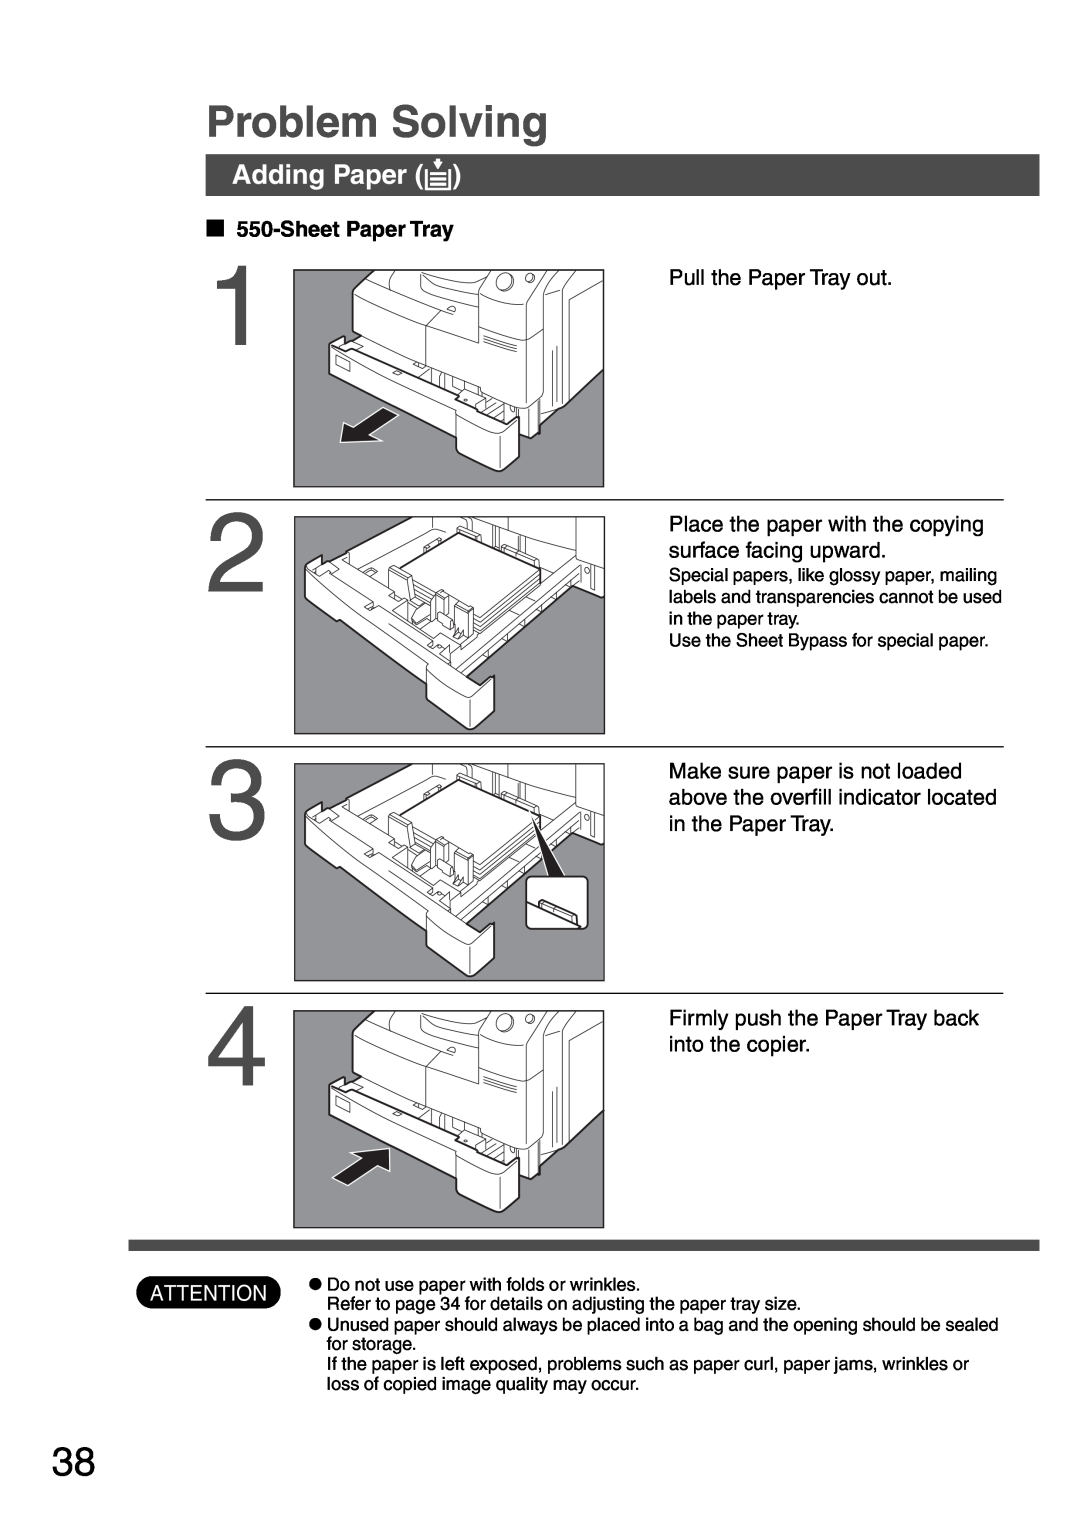 Panasonic DP-1810F manual Problem Solving, Adding Paper J, Sheet Paper Tray 